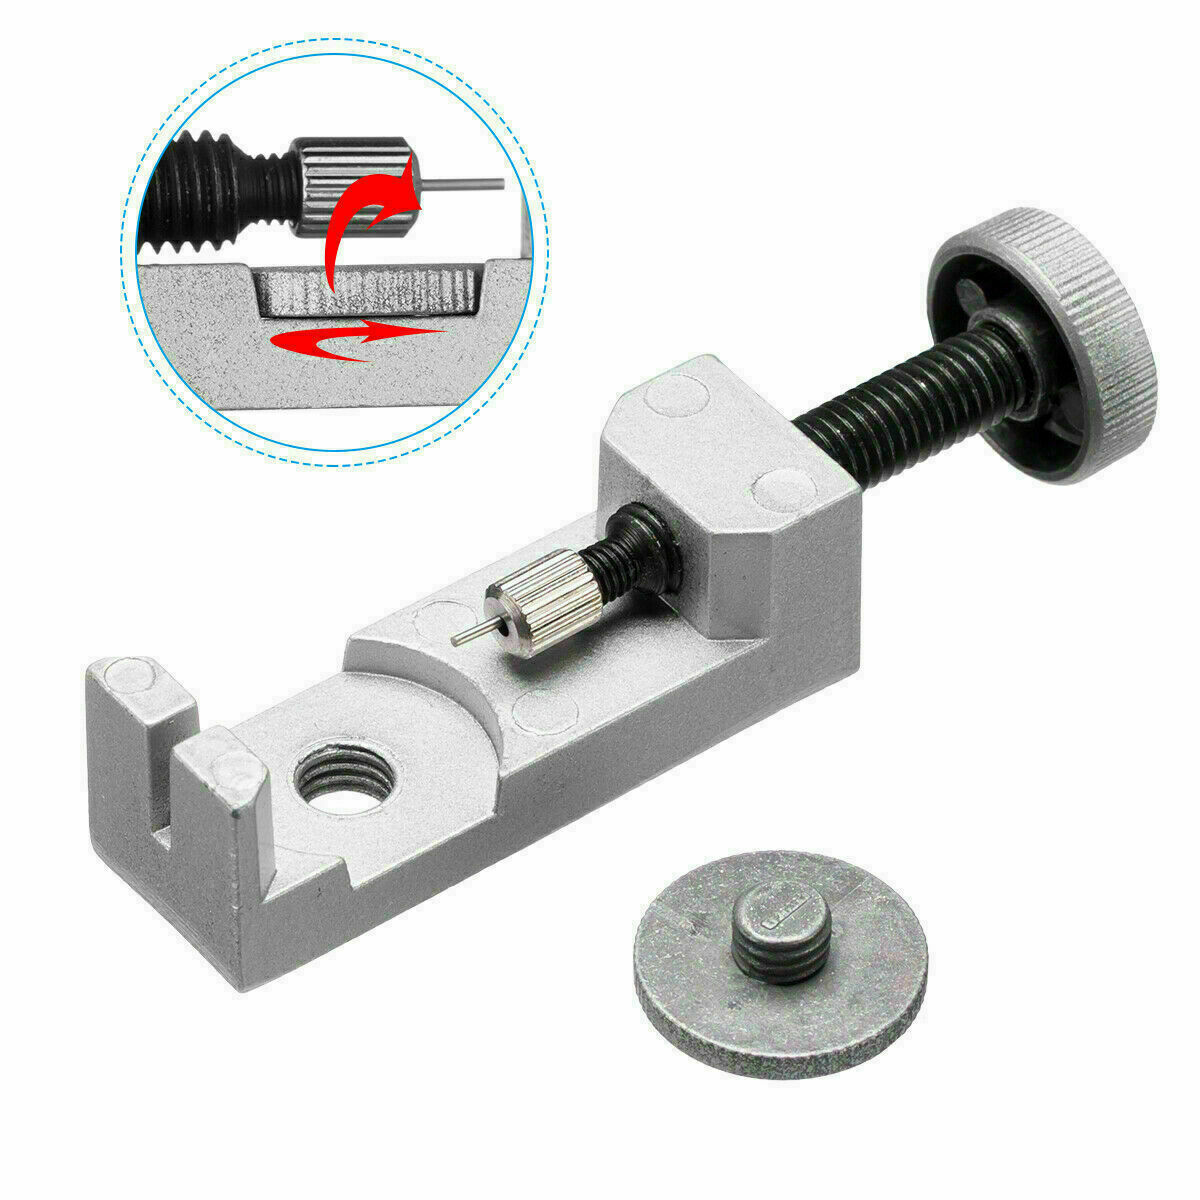 Metal Adjustable Watch Band Strap Bracelet Link Pin Remover Repair Tool Kit US 9